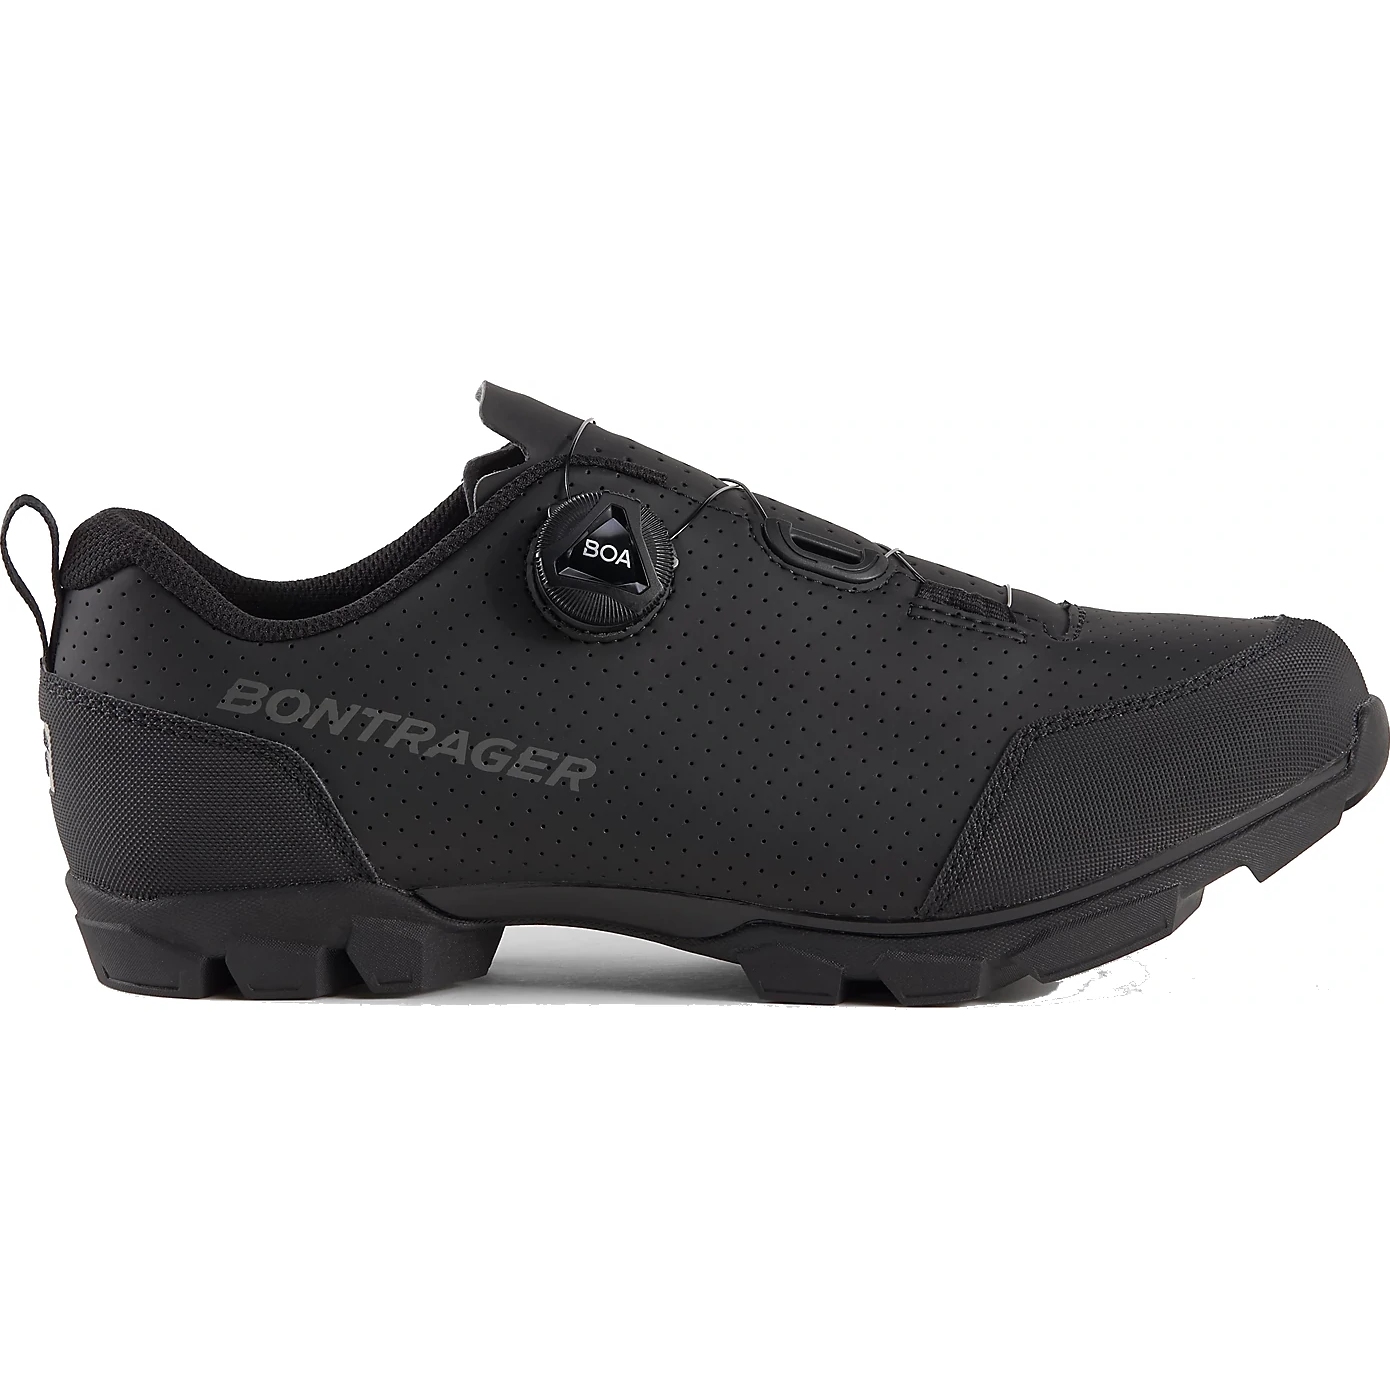 Image of Bontrager Evoke Mountainbike Shoe - black